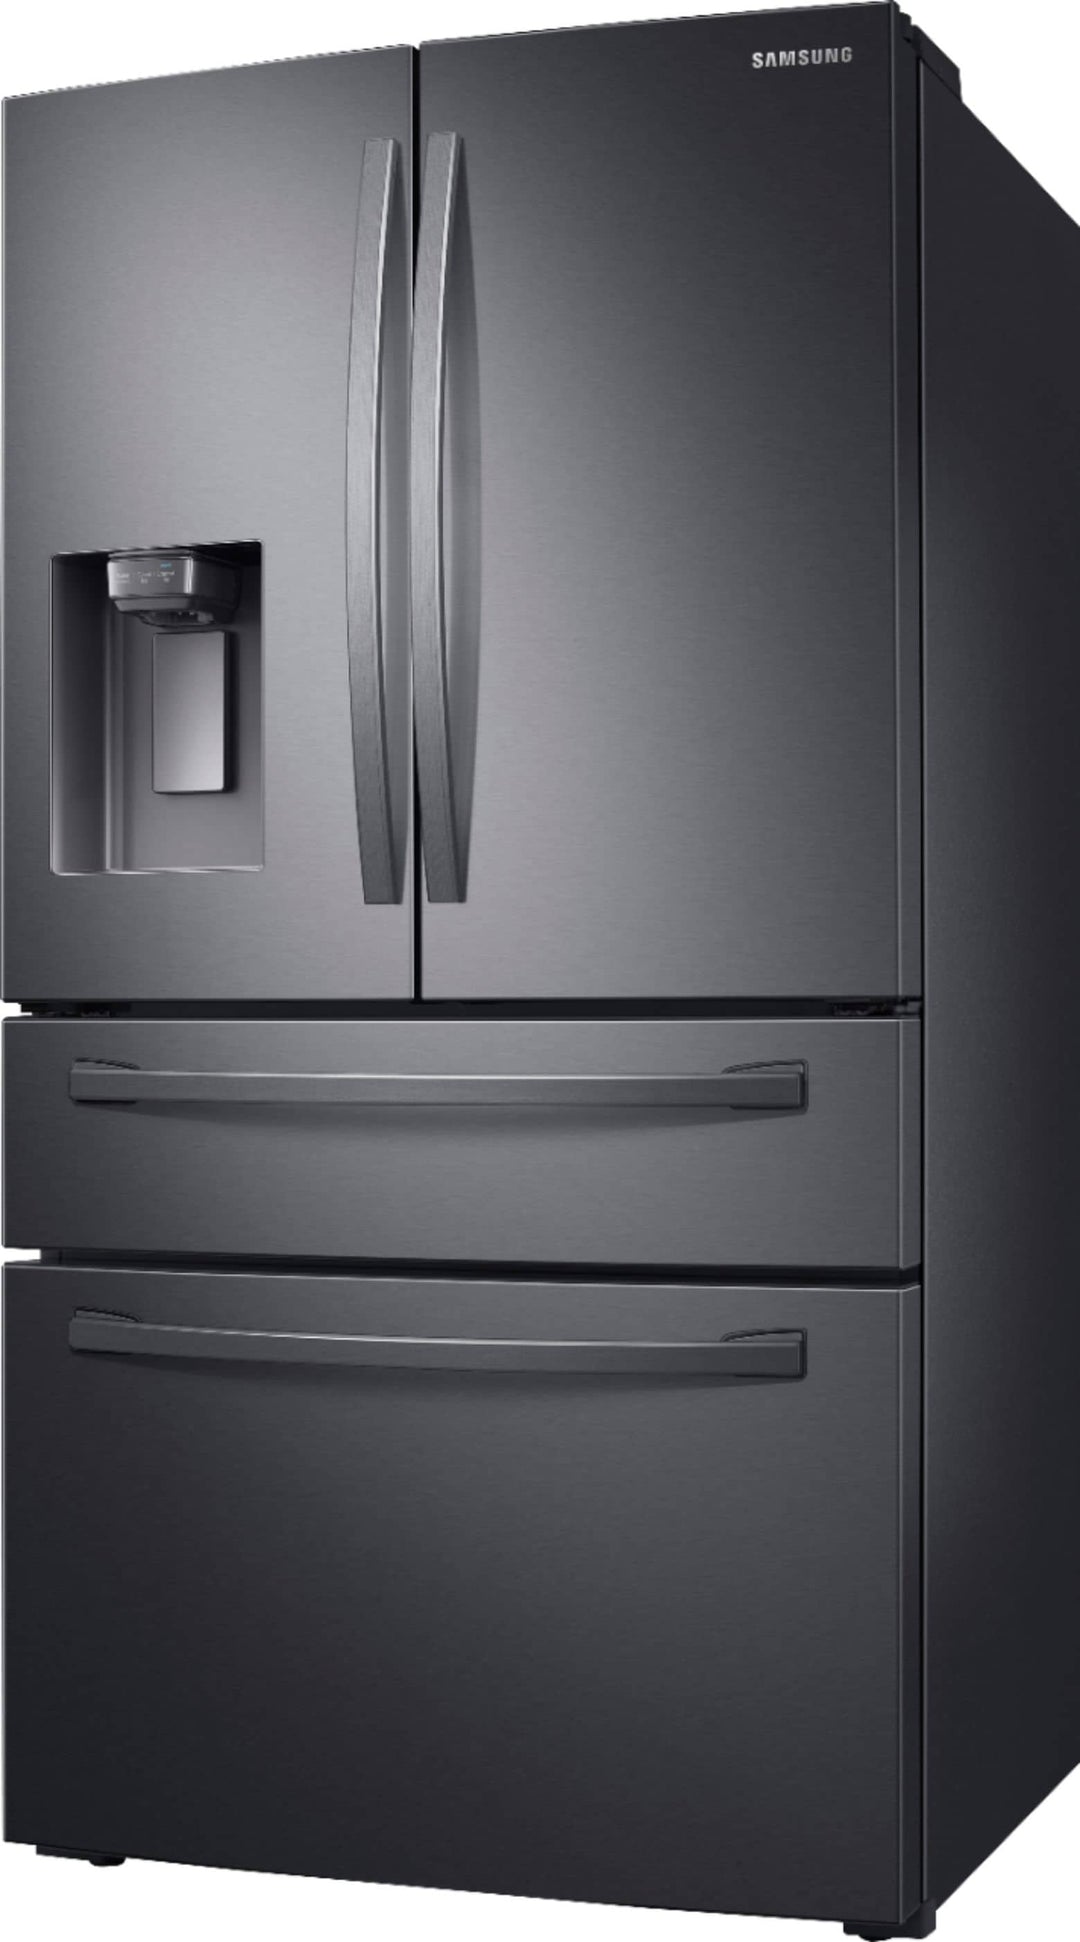 Samsung - 22.6 cu. ft. 4-Door French Door Counter Depth Refrigerator with FlexZone™ Drawer - Black stainless steel_7